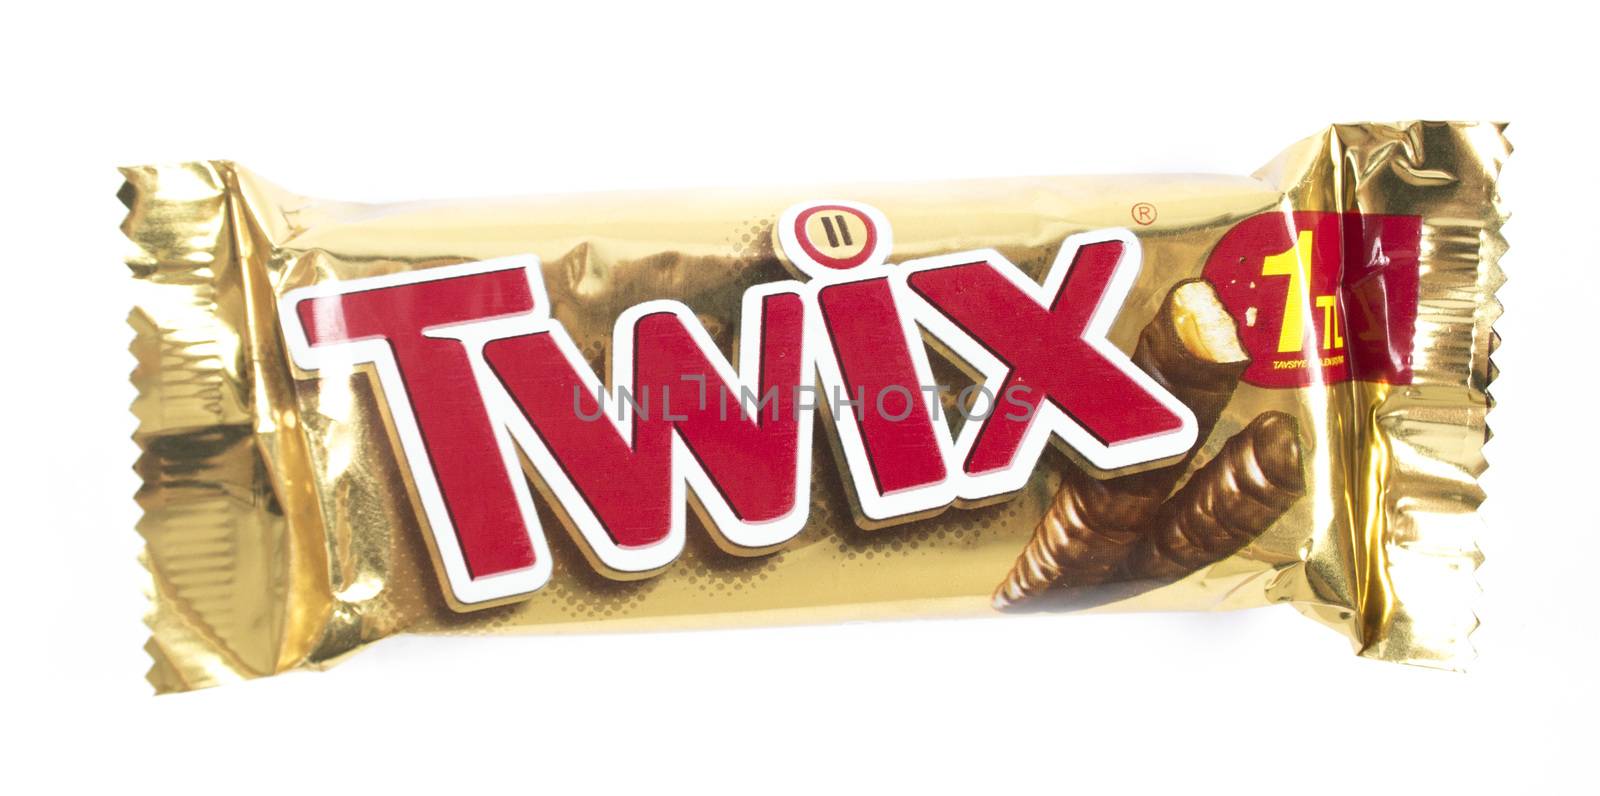 Amman, Jordan - December 5, 2014: Twix chocolate bar isolated on white background. Twix chocolate bar made by Mars, Incorporated.